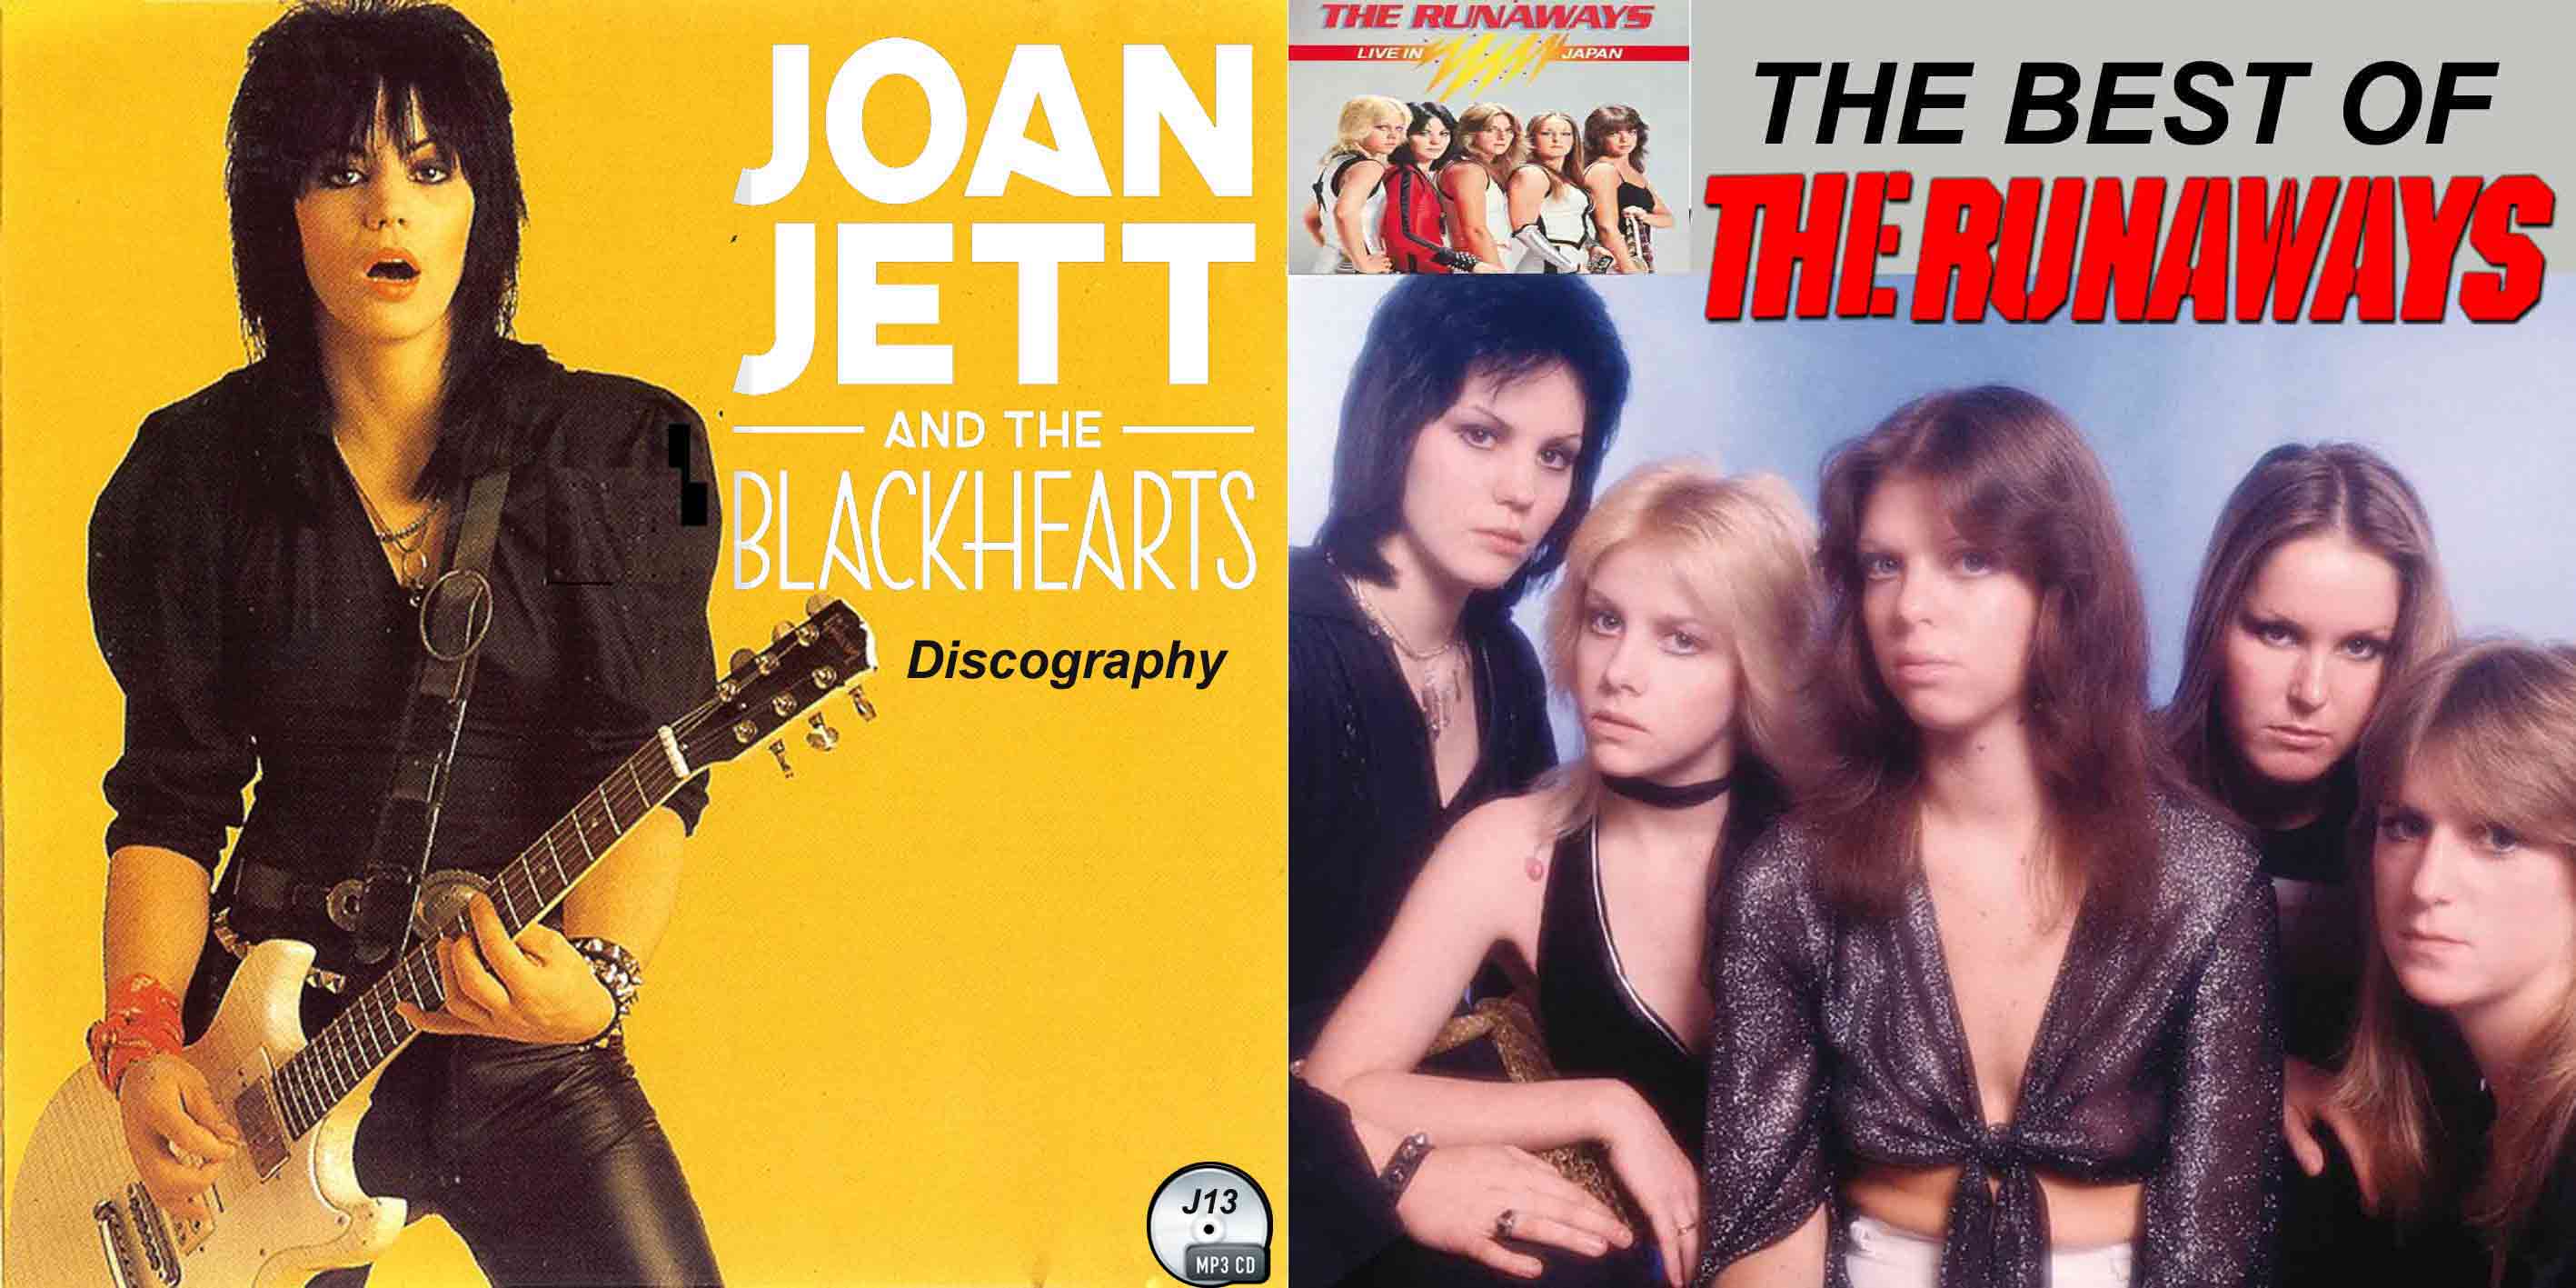 JOAN JETT AND THE BLACKHEARTS 2ndアルバム